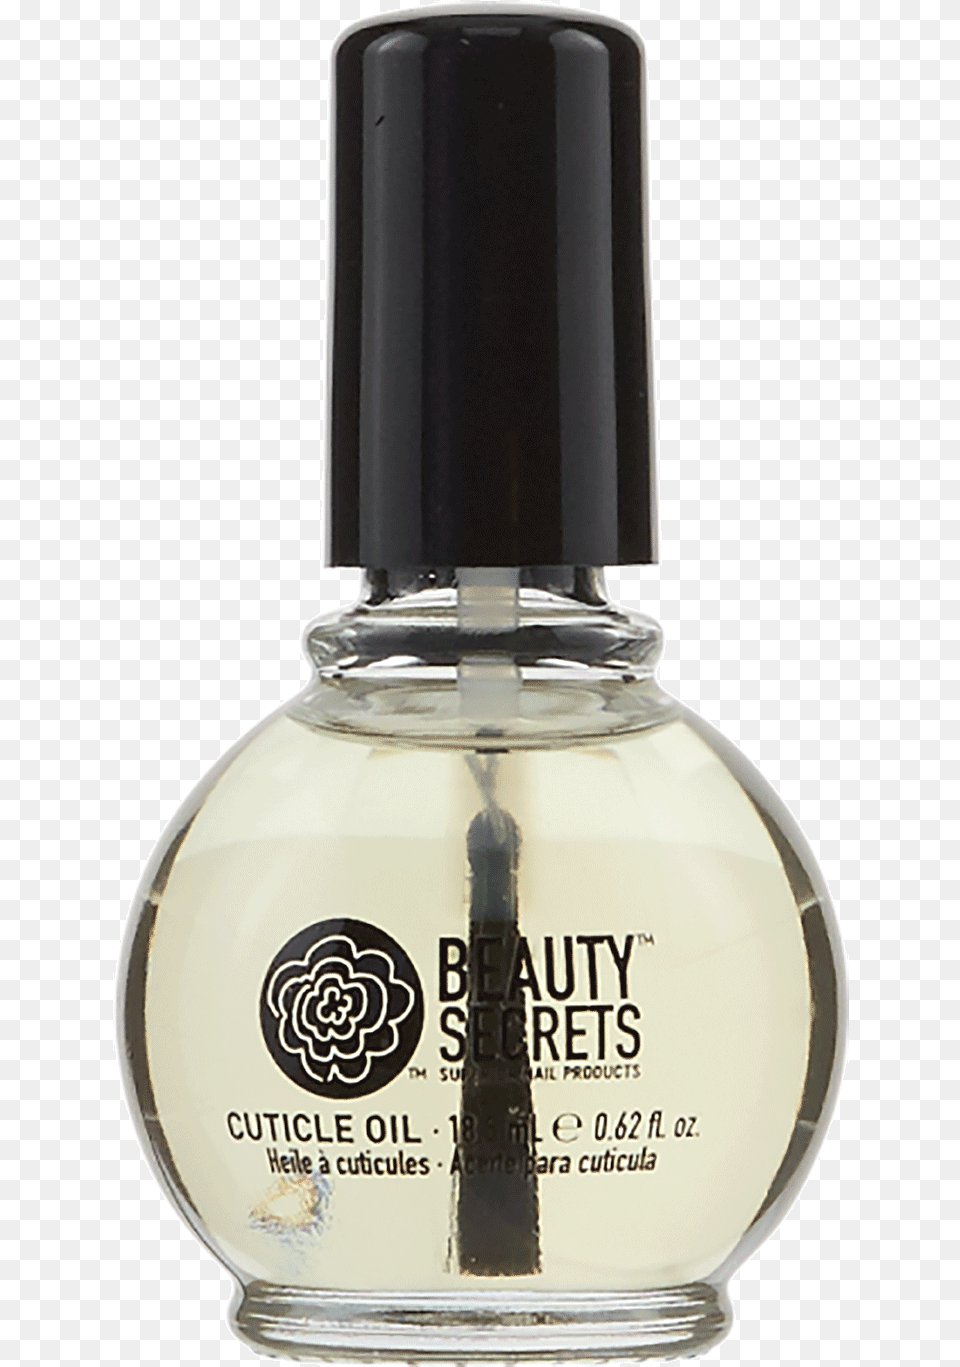 Beauty Secrets Cuticle Oil, Bottle, Cosmetics, Perfume Png Image